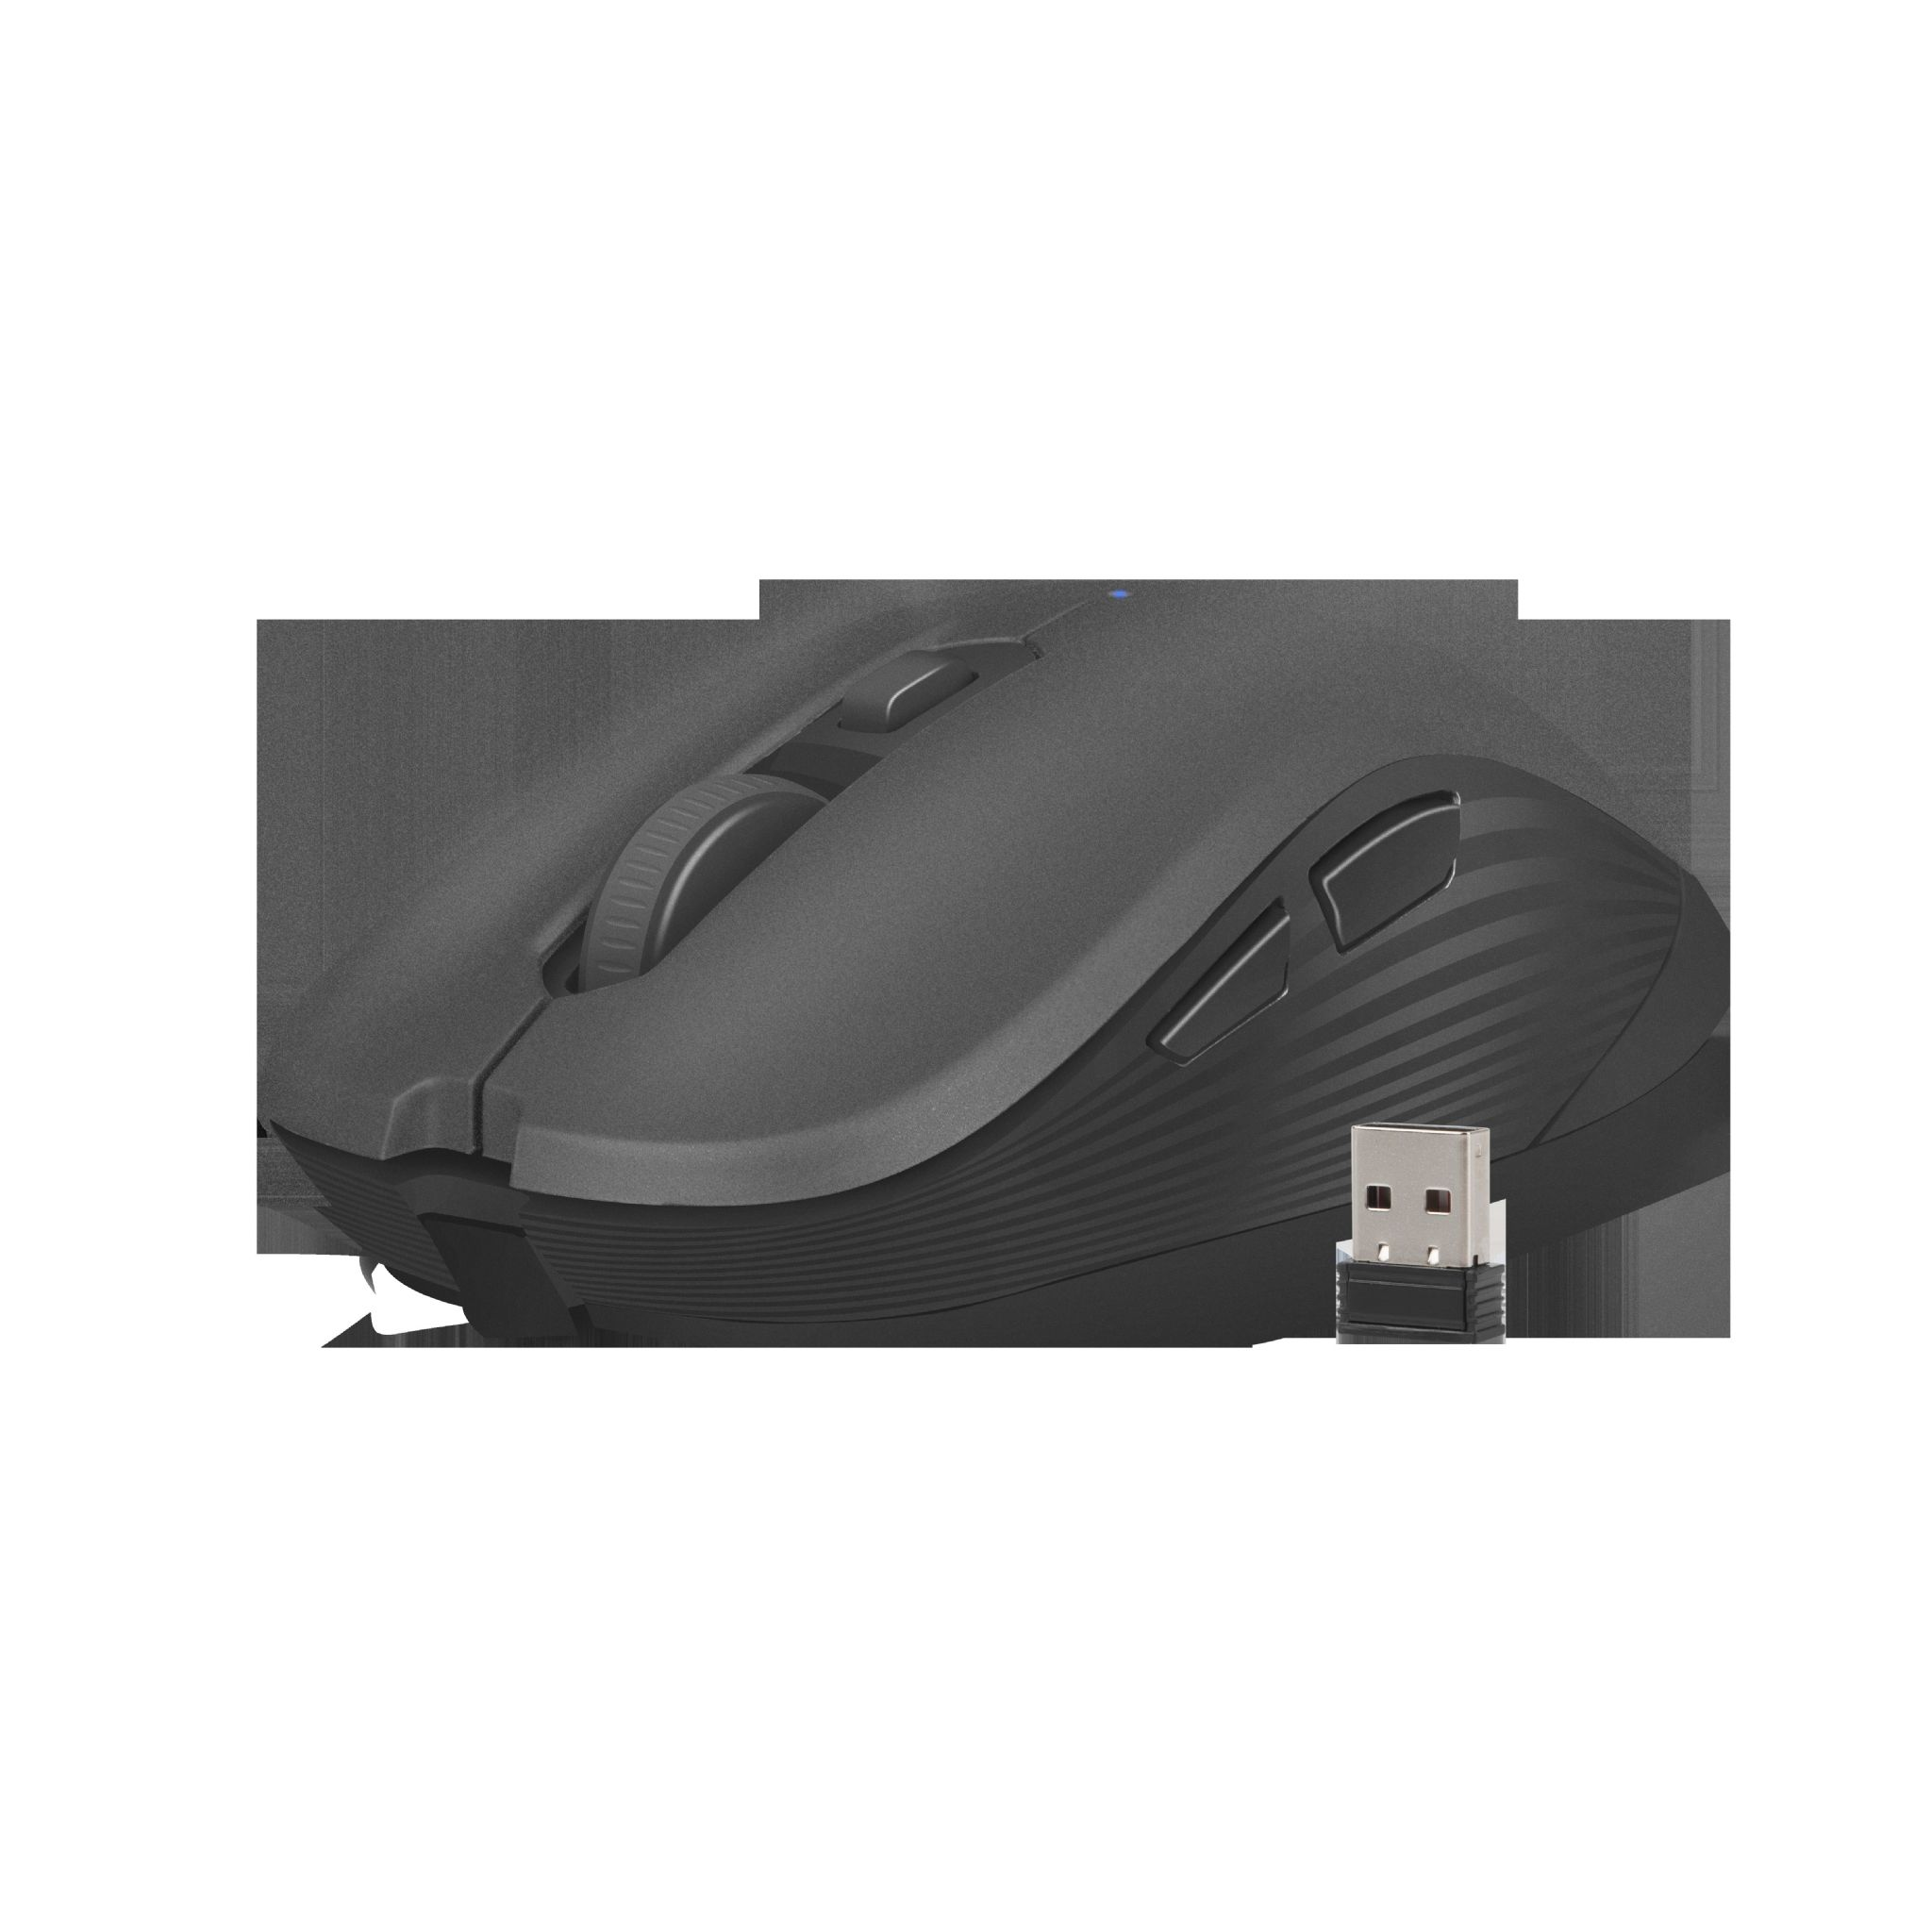 NATEC Kabellose Maus Robin 1600 Desktop-Set, Black DPI